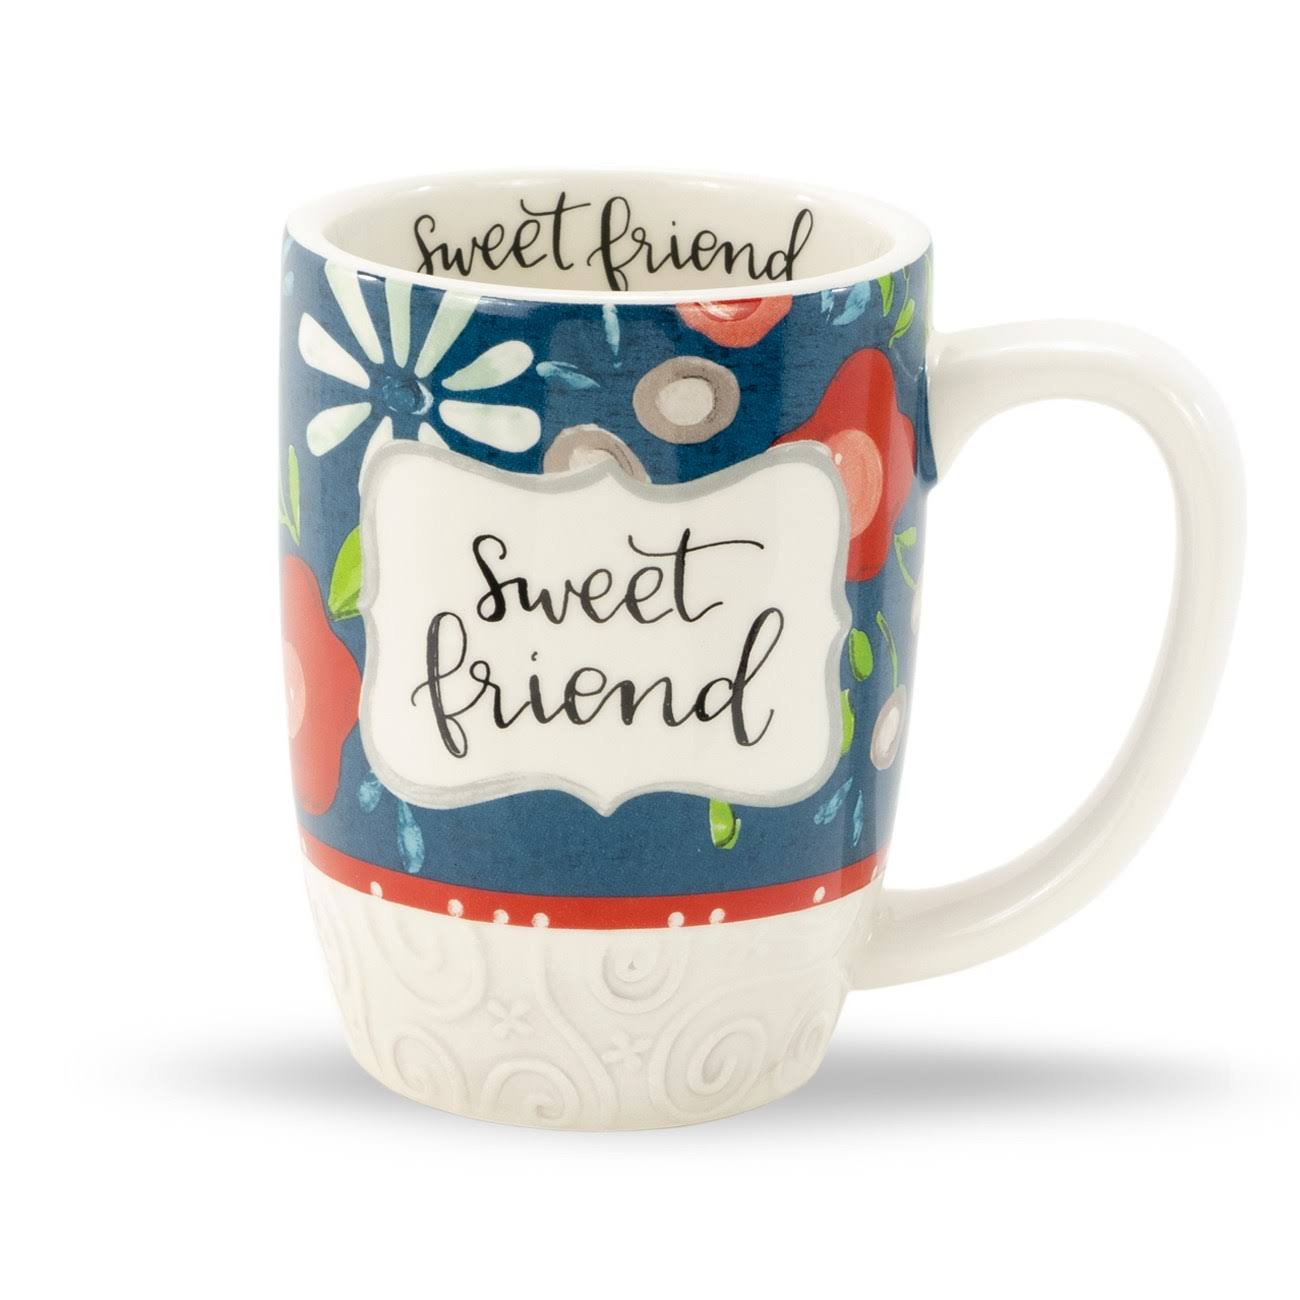 Brownlow Blue & White Floral 'Sweet Friend' Mug 6" x 8.5"